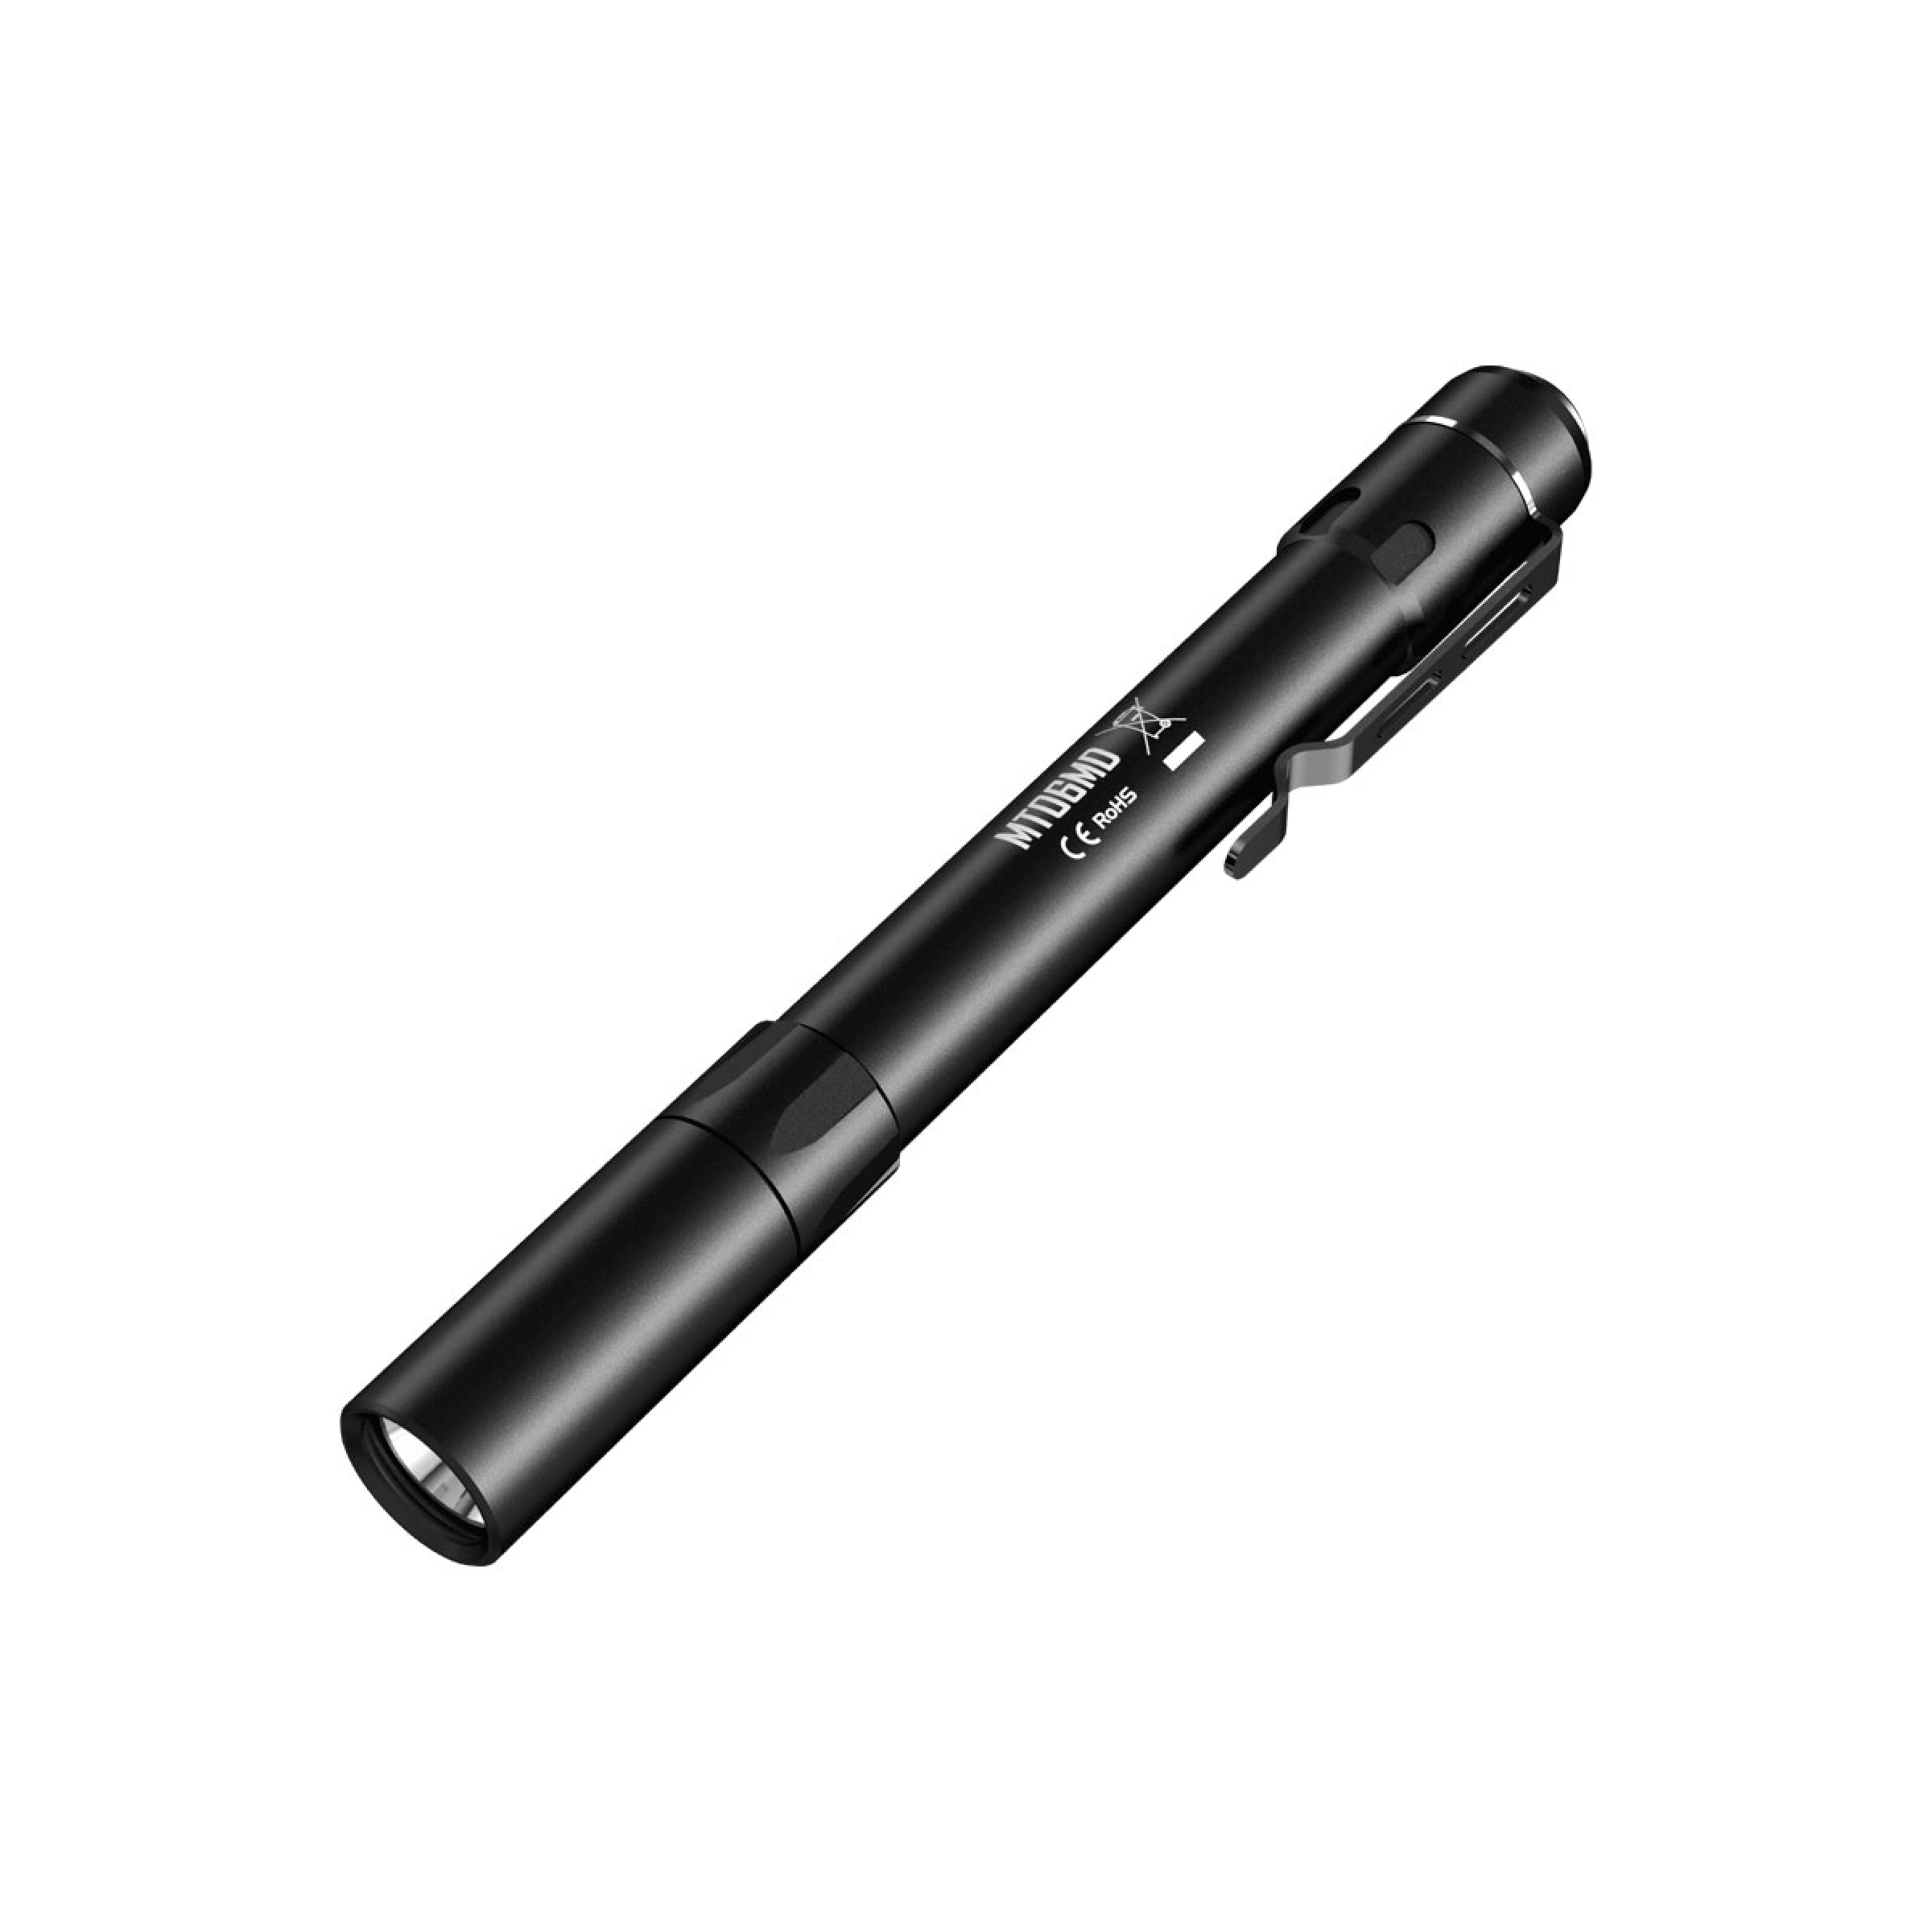 Nitecore Pro Penlight MT06MD